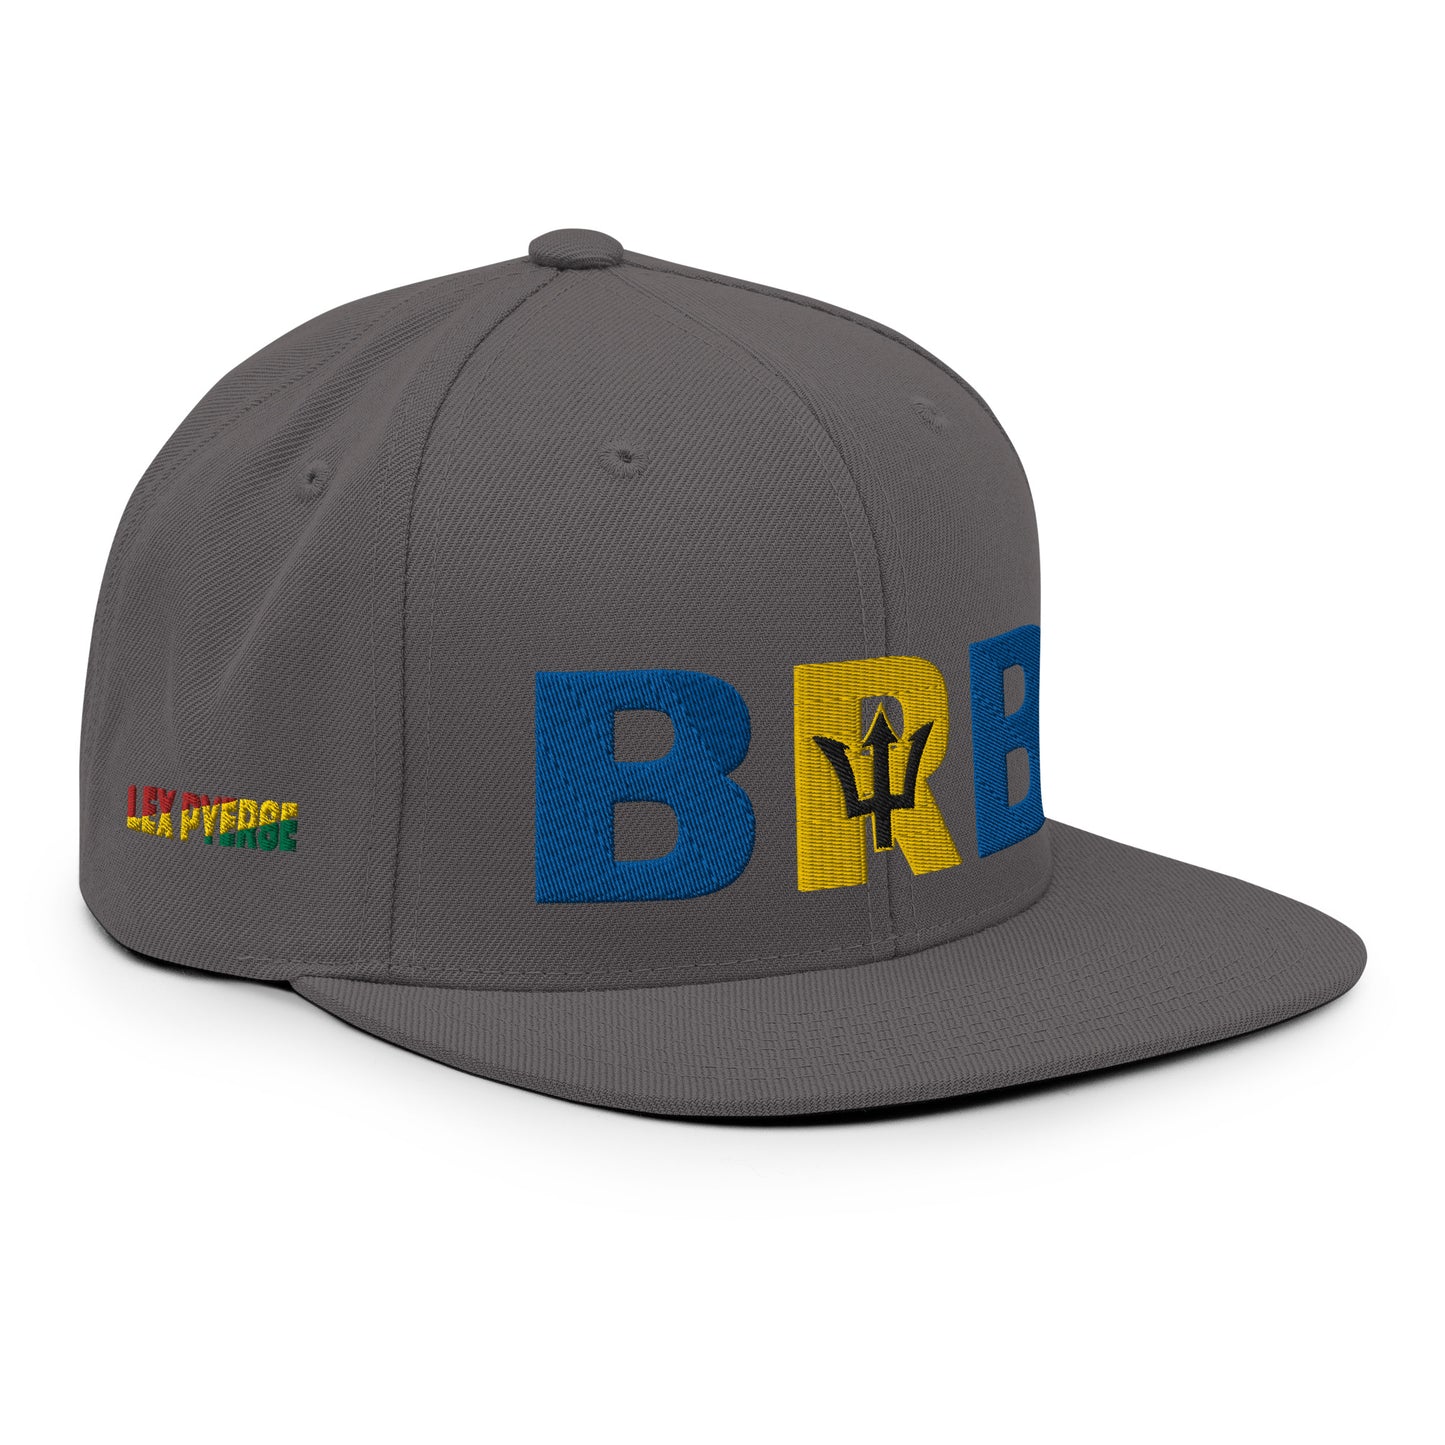 BARBADOS National Flag Inspired Snapback Hat